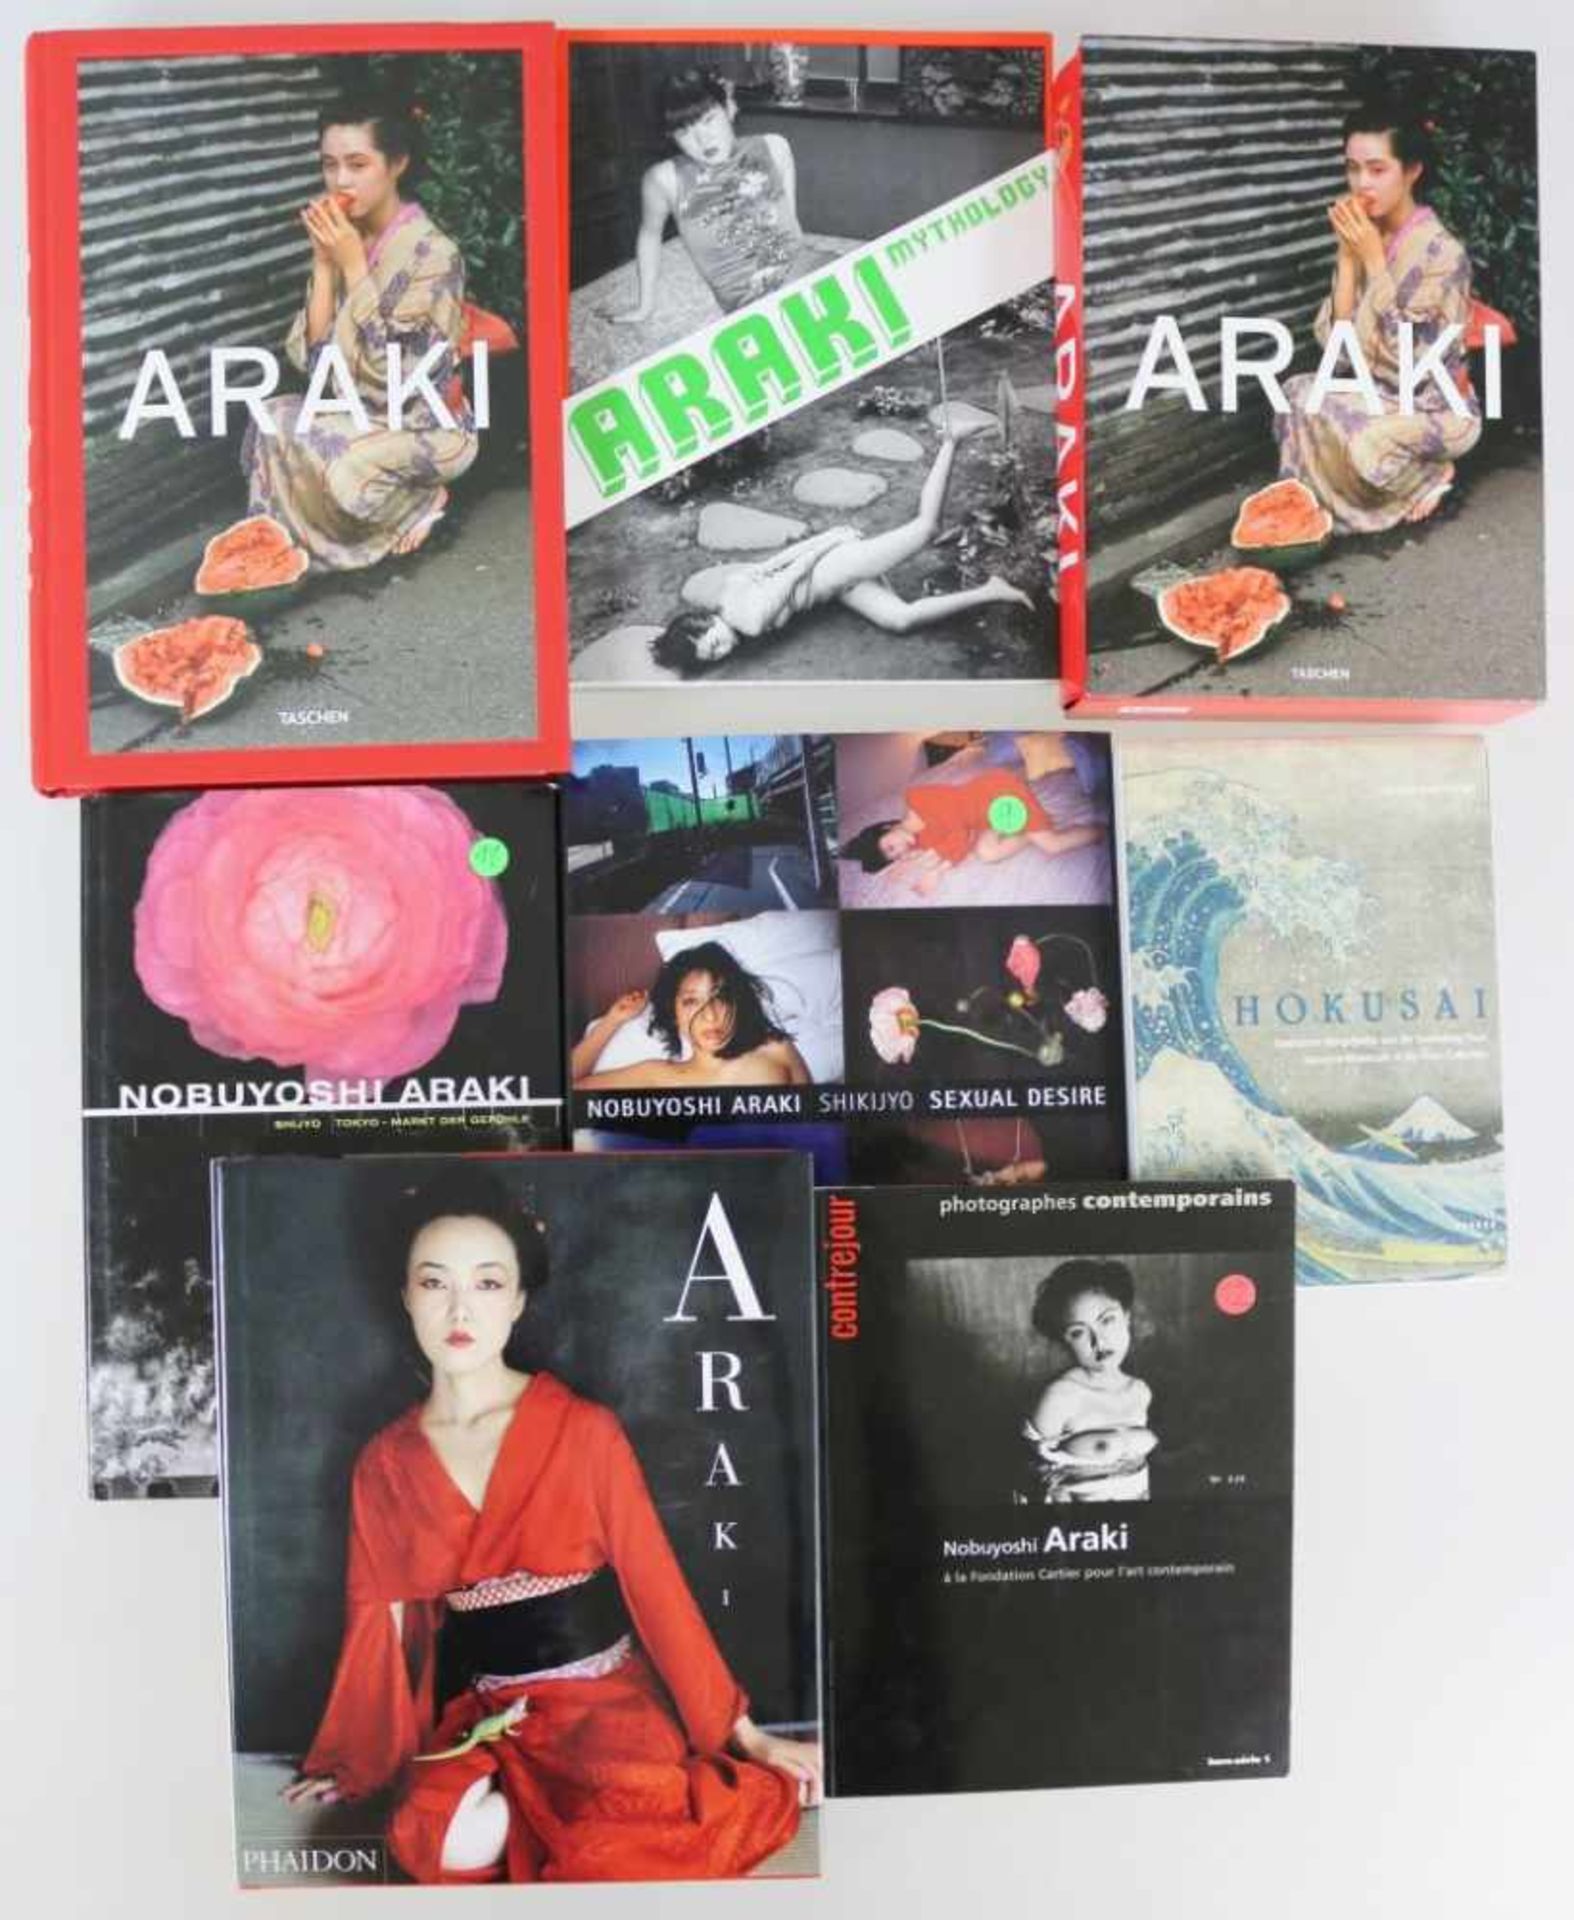 Nobuyoshi ARAKI (1940 Tokio), acht Bände: Araki meets Hokusai 2009, Sexual Desire 1996/97, ARAKI (